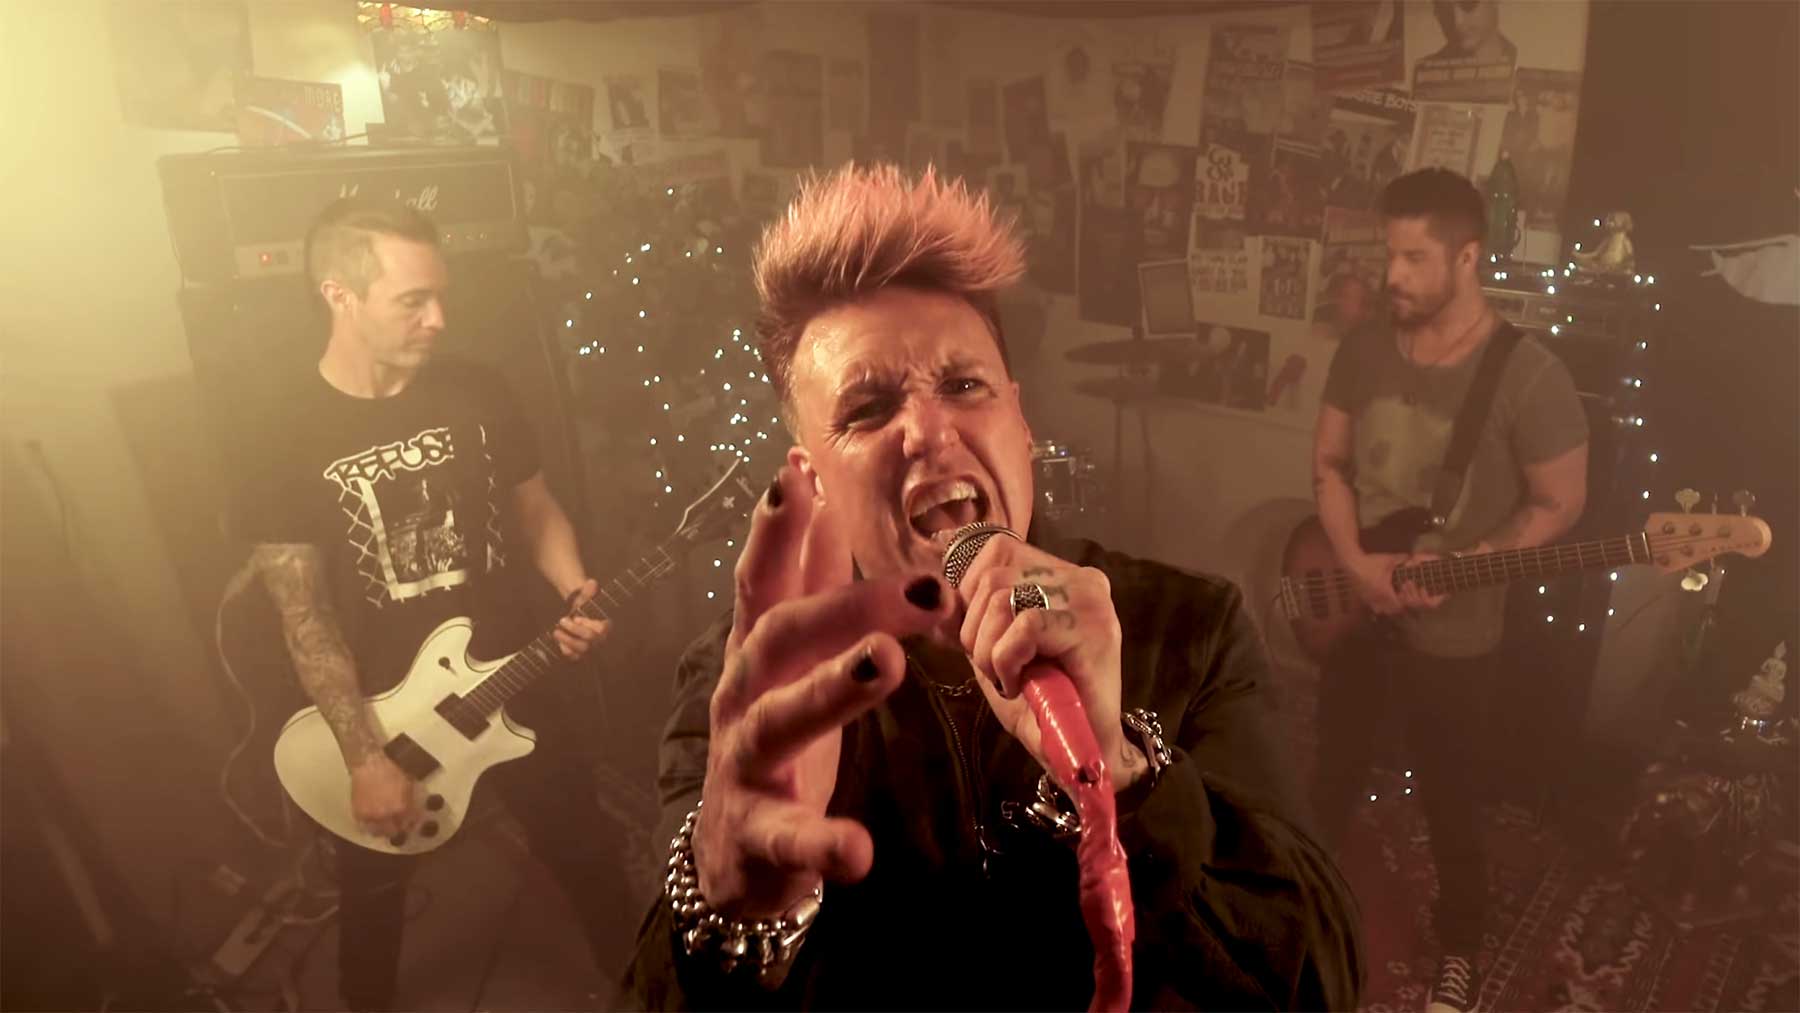 Musikvideo: Papa Roach - "Cut The Line" Papa-Roach-Cut-The-Line-Musikvideo 